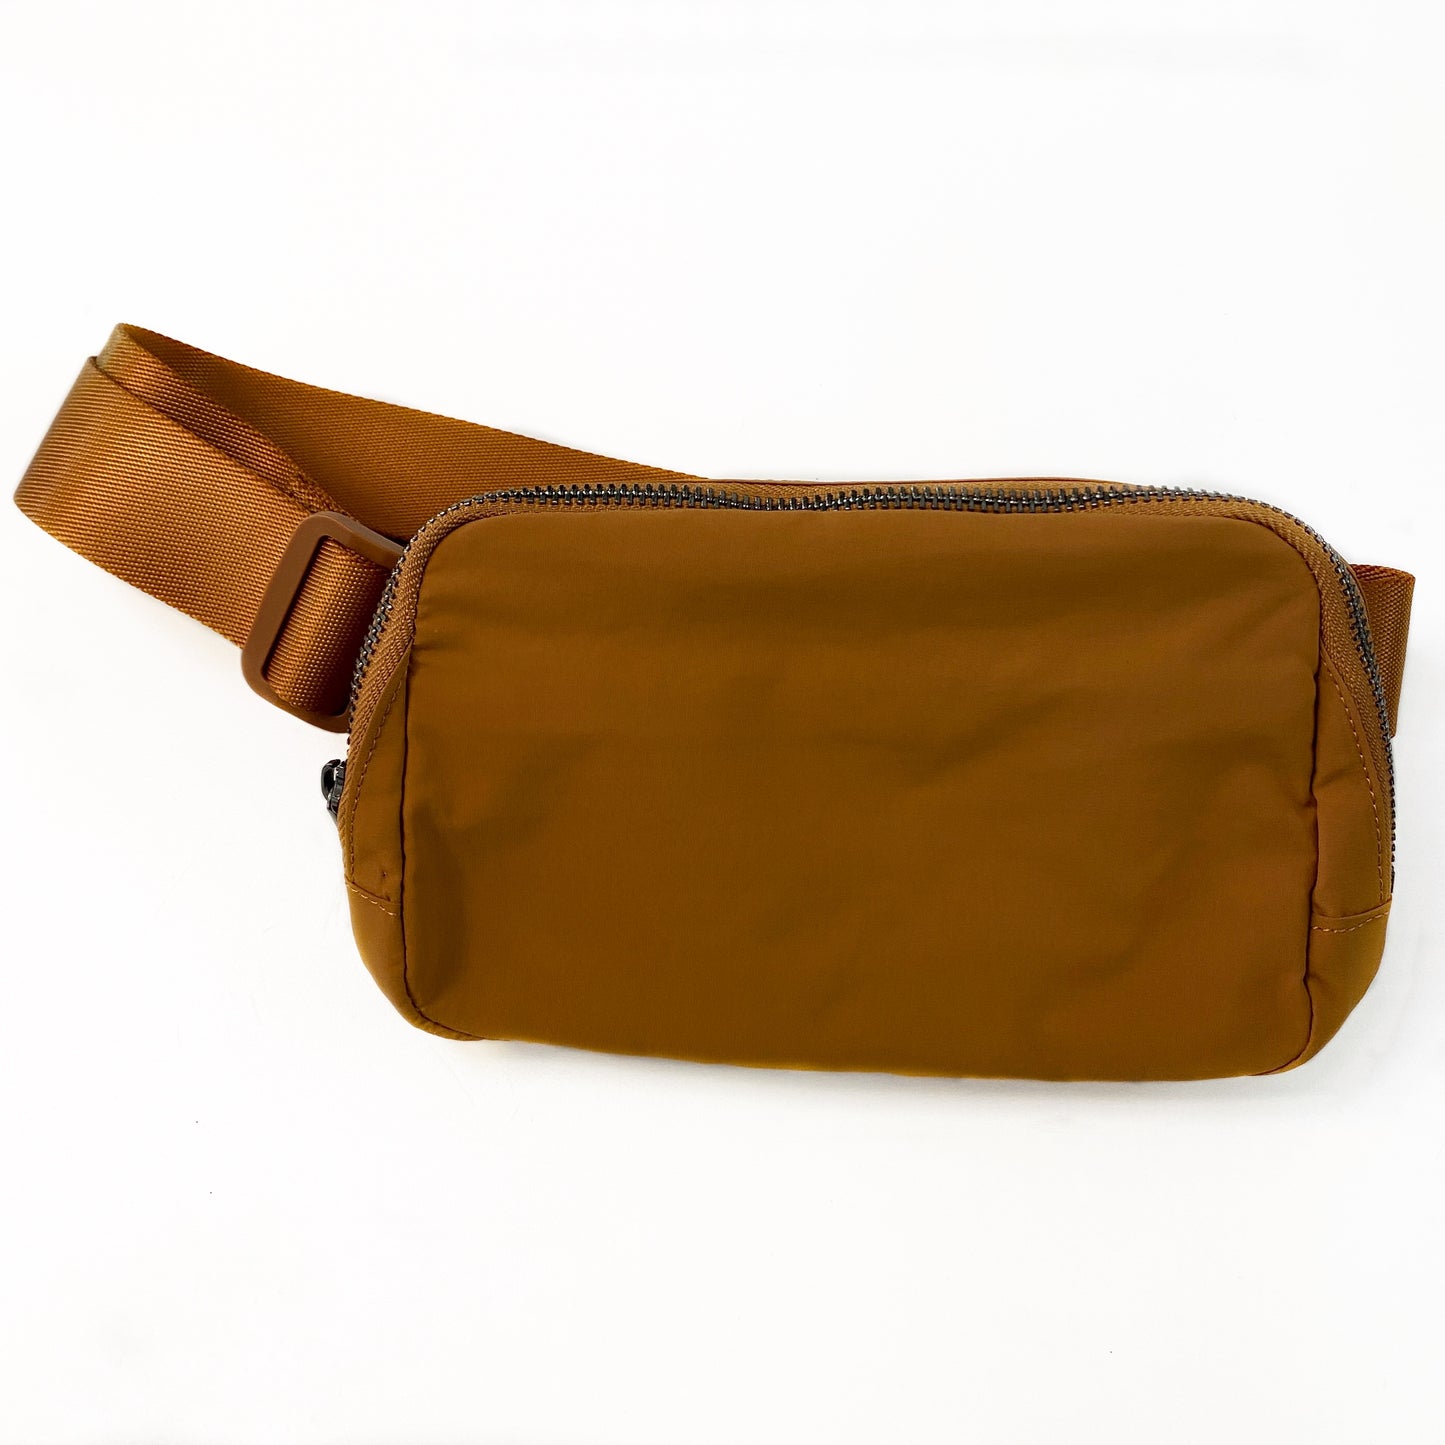 The Everyday Convertible Belt & Crossbody Bag